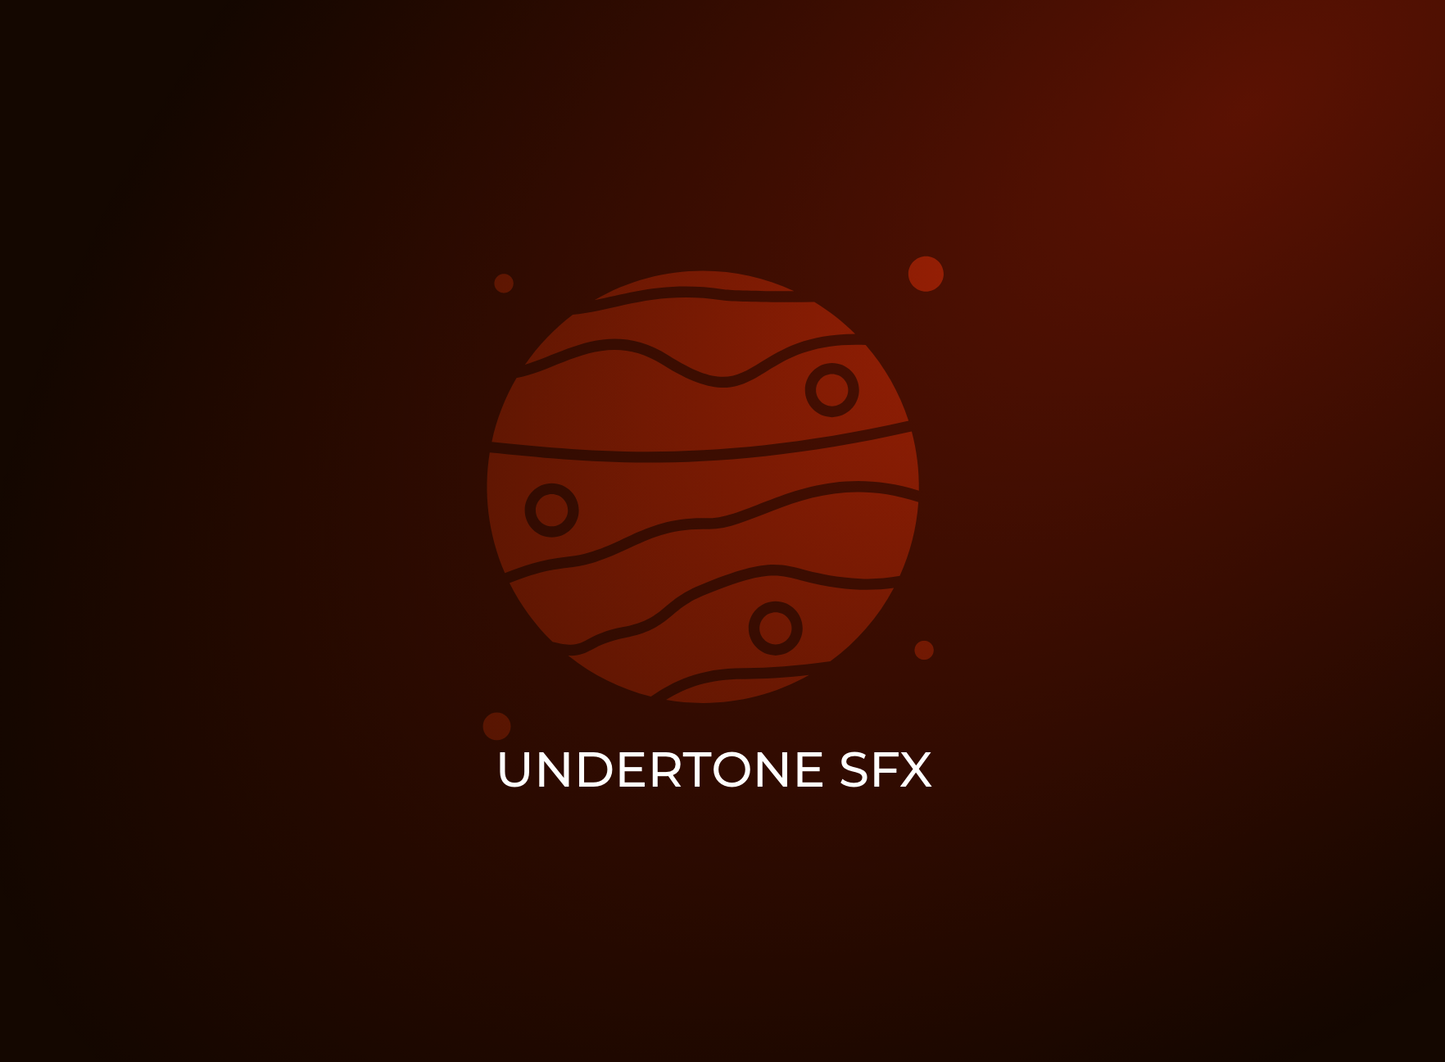 Undertone Sound Effects - SFX for Final Cut Pro, Premiere Pro, DaVinci Resolve - C Creation Store